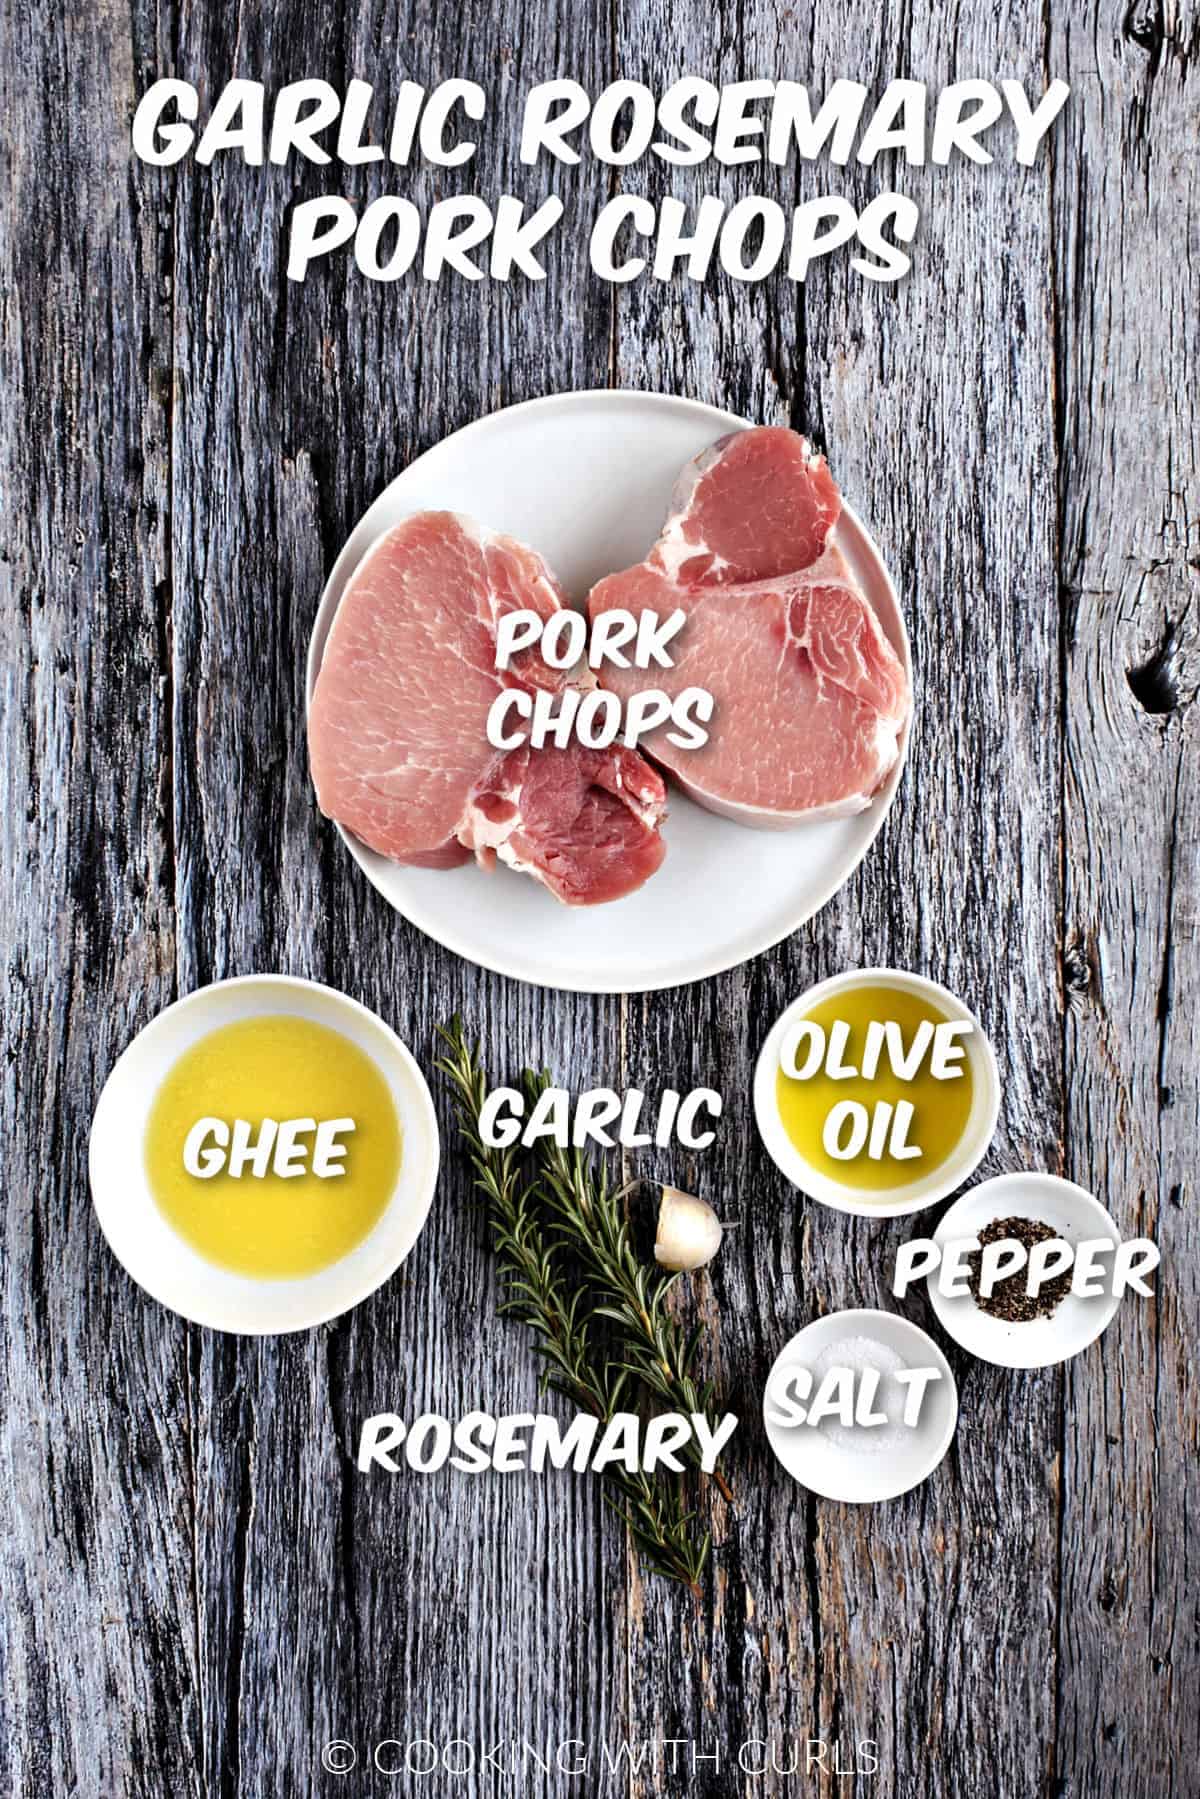 Bone-in pork chops, ghee, fresh rosemary, garlic clove, olive oil, salt, and pepper.  